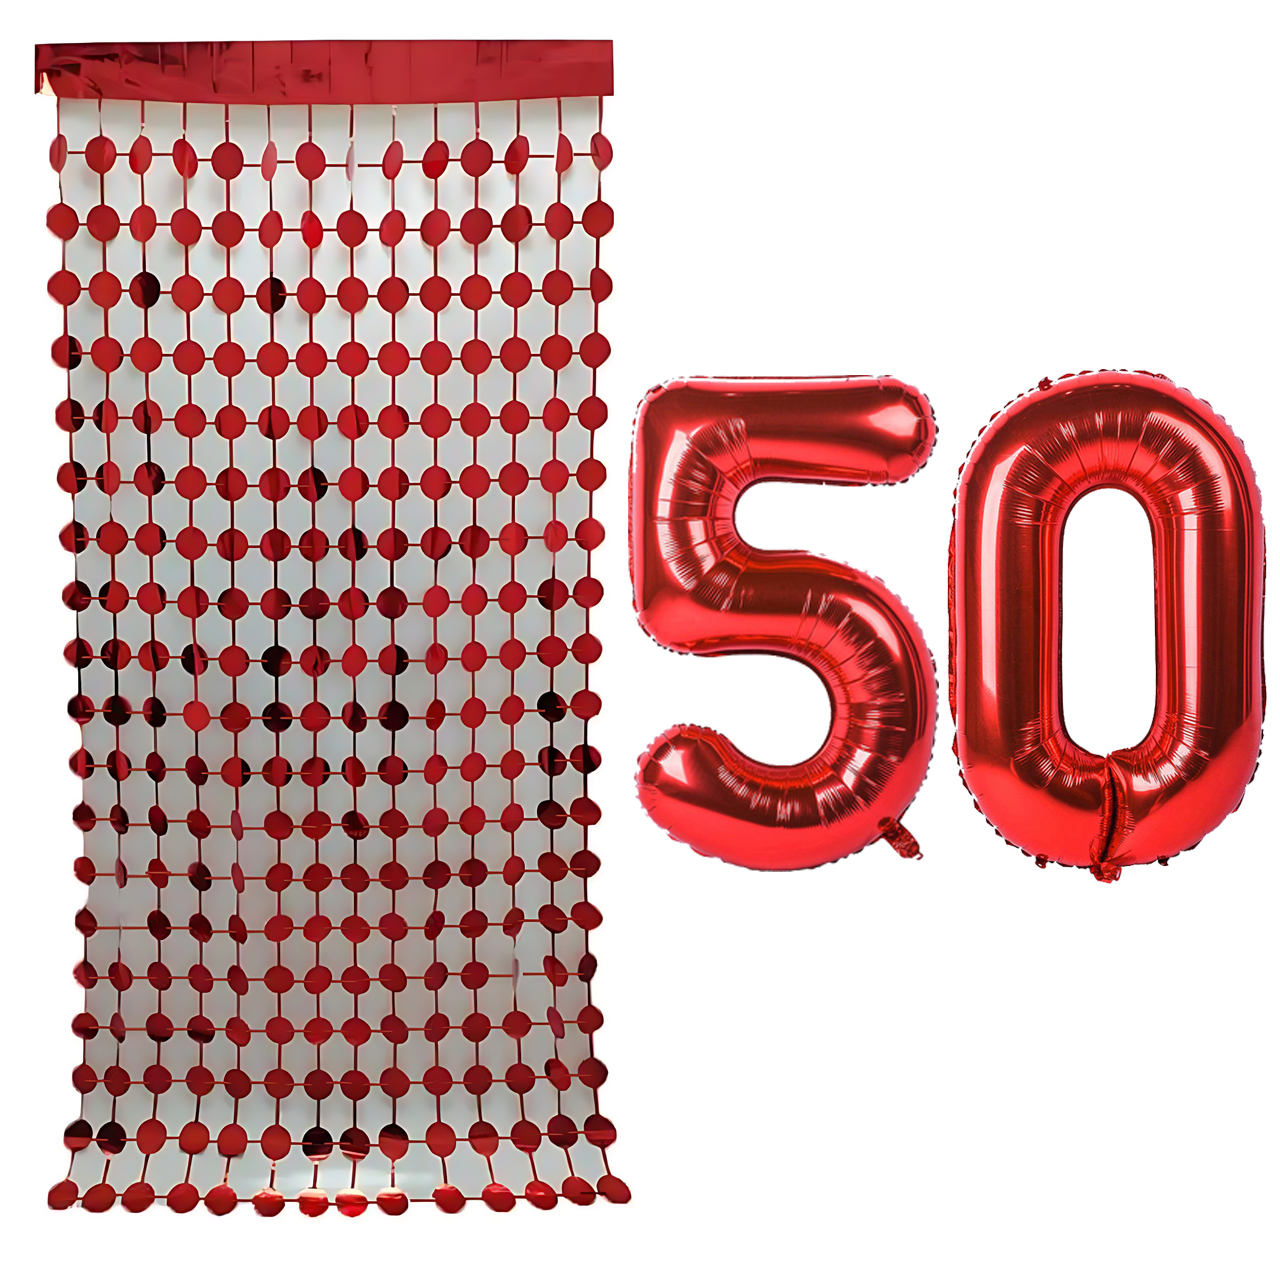 بادکنک فویلی مستر تم طرح عدد 50 به همراه ریسه تزئینی بسته 3 عددی